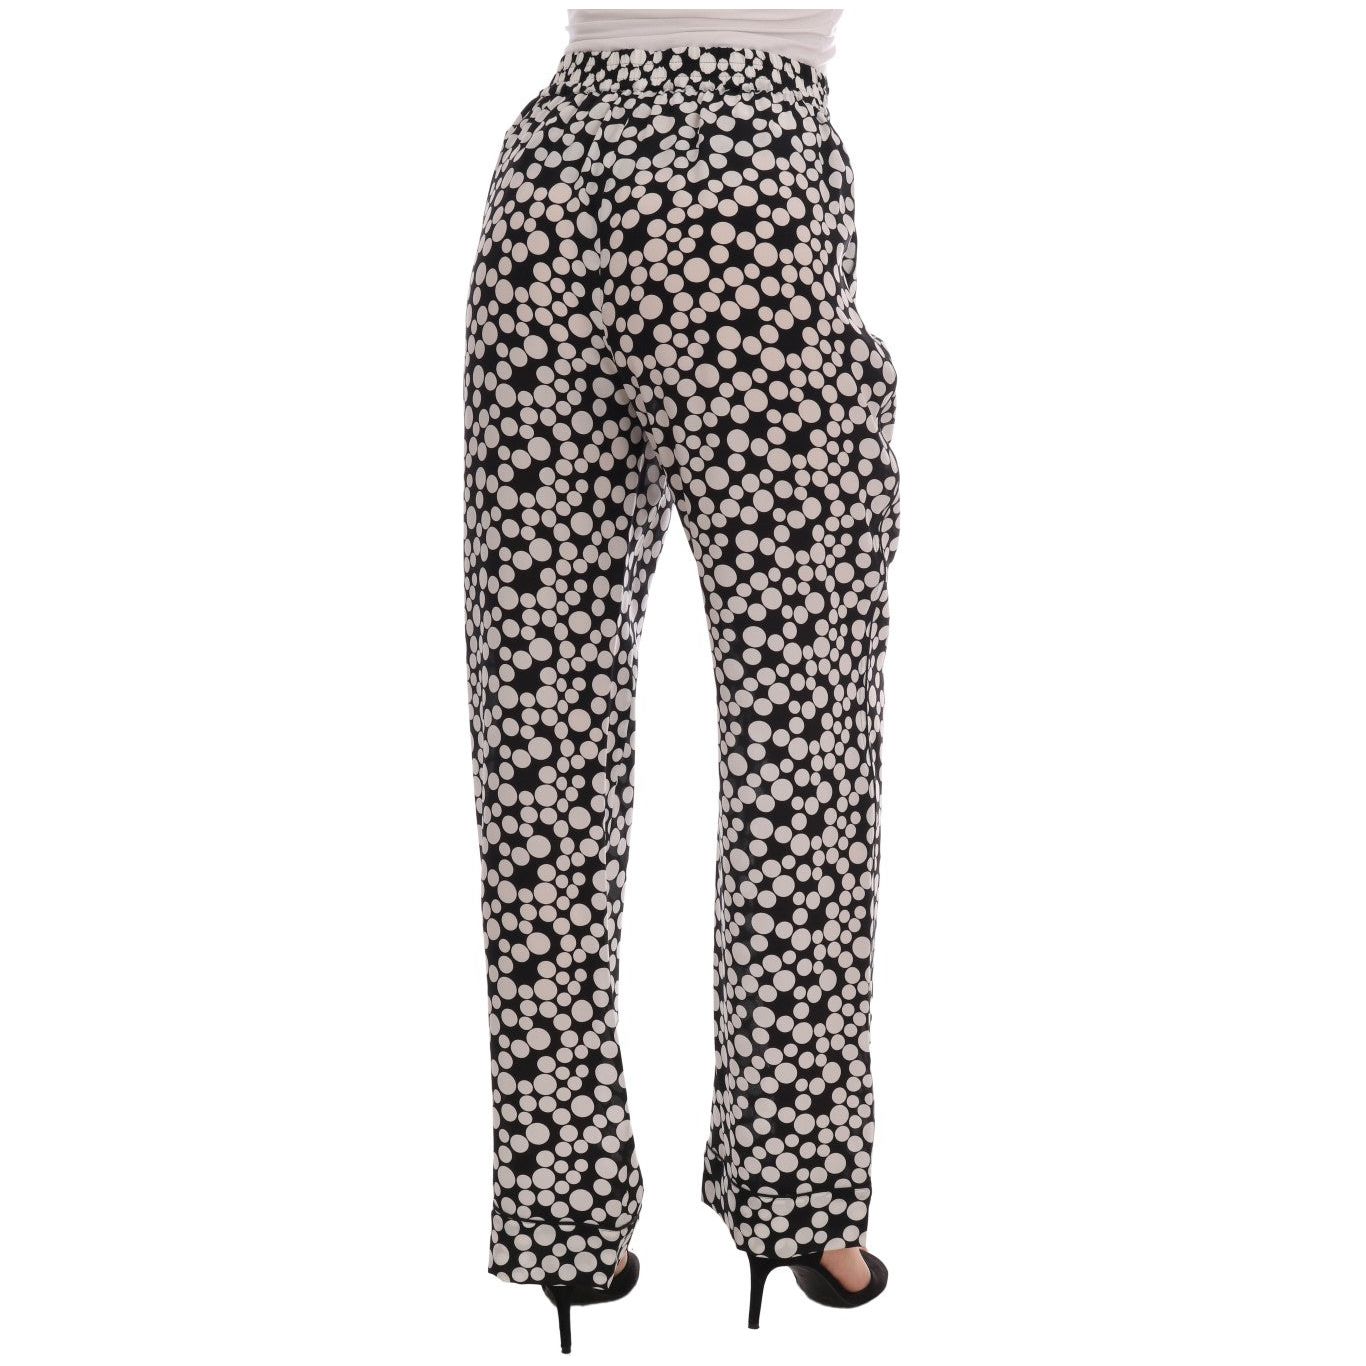 Dolce & Gabbana Elegant Polka Dot Silk High-Waist Pants black-white-polka-dottes-silk-pants Jeans & Pants 508363-black-white-polka-dottes-silk-pants-2.jpg